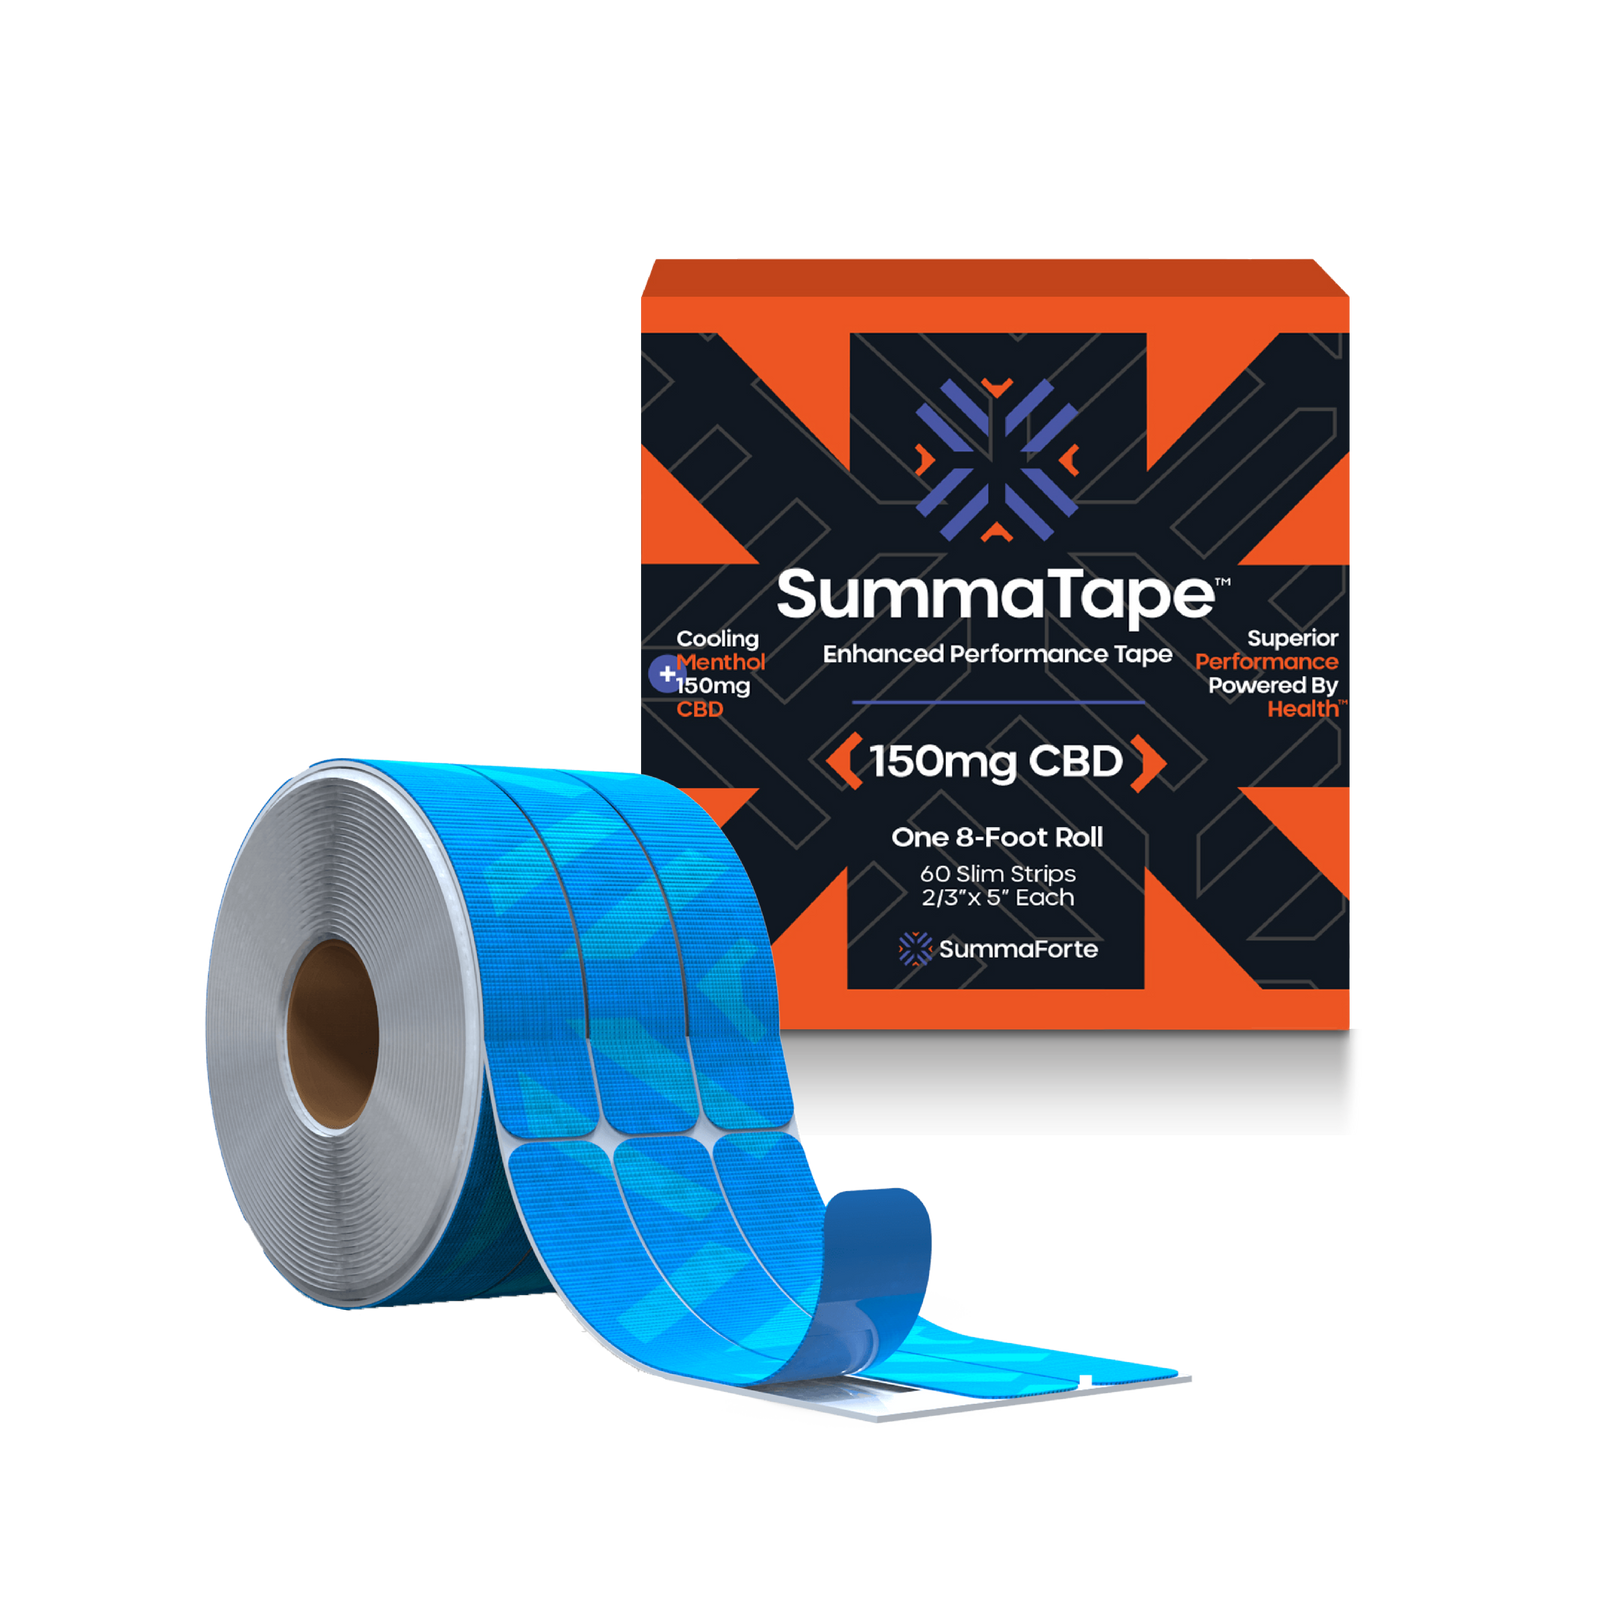 CBD Infused Kinesiology Tape - Pre-Cut Slim Strips